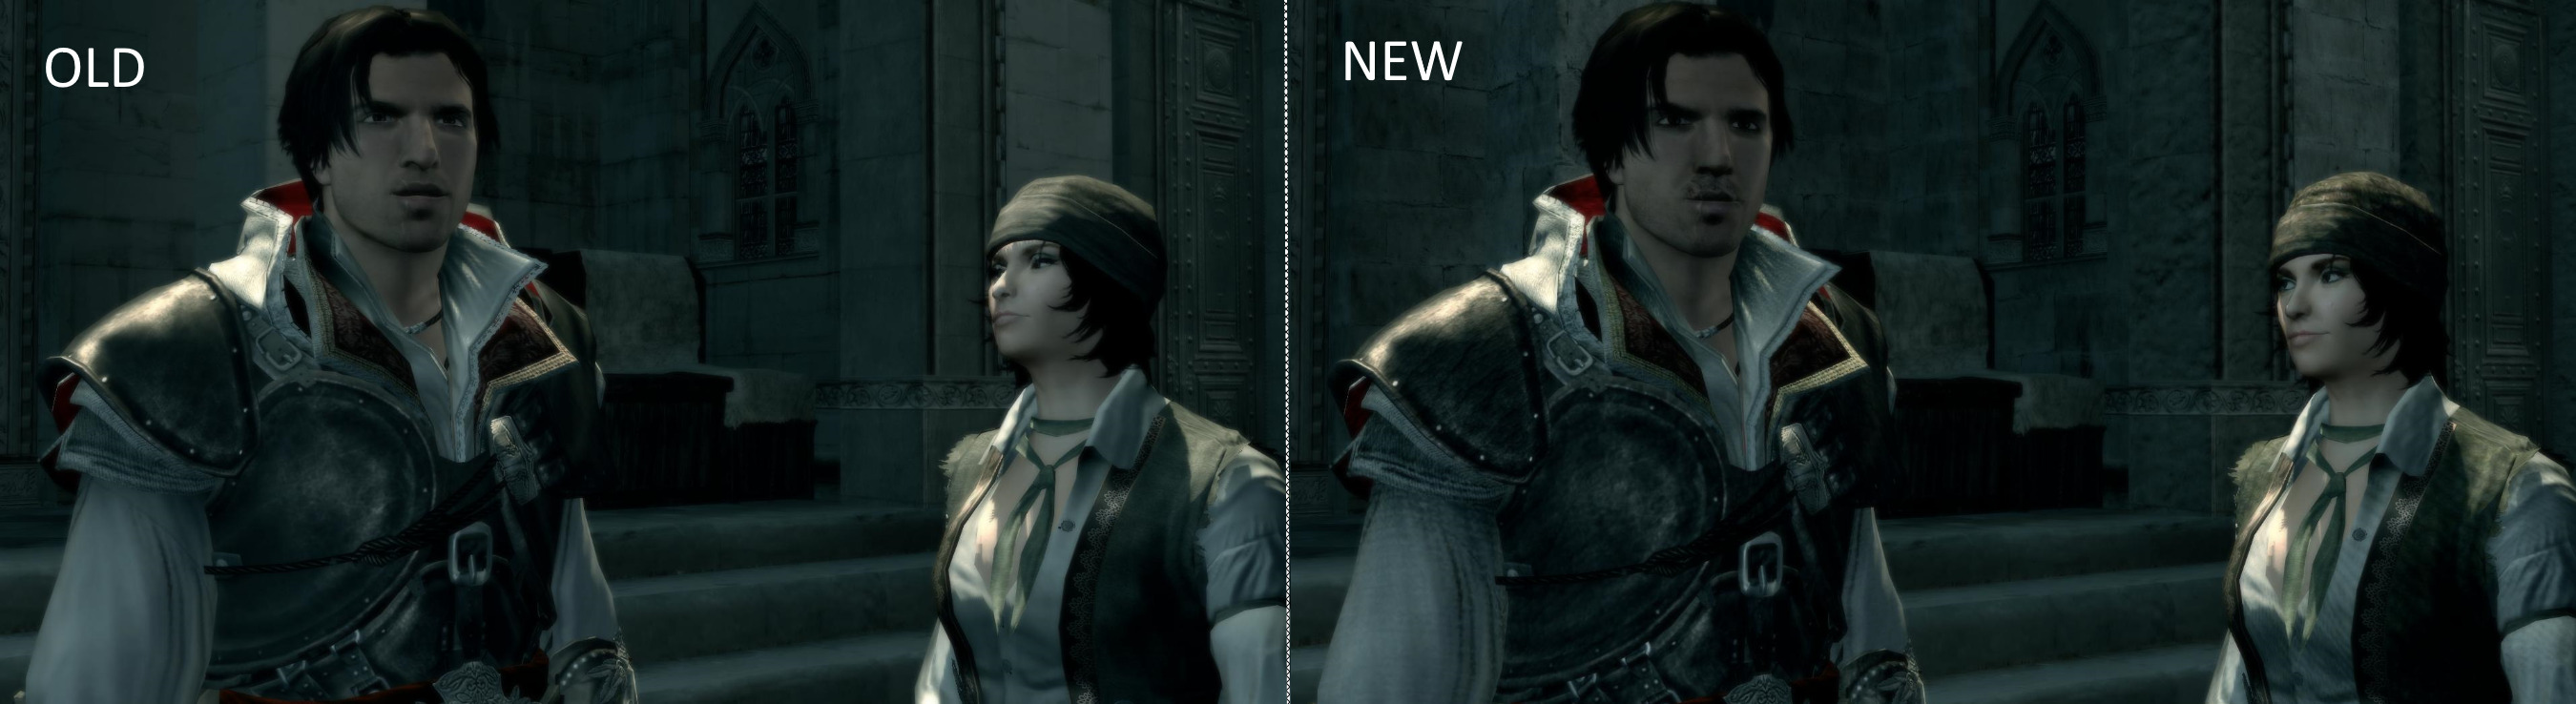 Ezio Face texure comparison image - Assassin's Creed 2 Overhaul mod for Assassin's  Creed II - ModDB